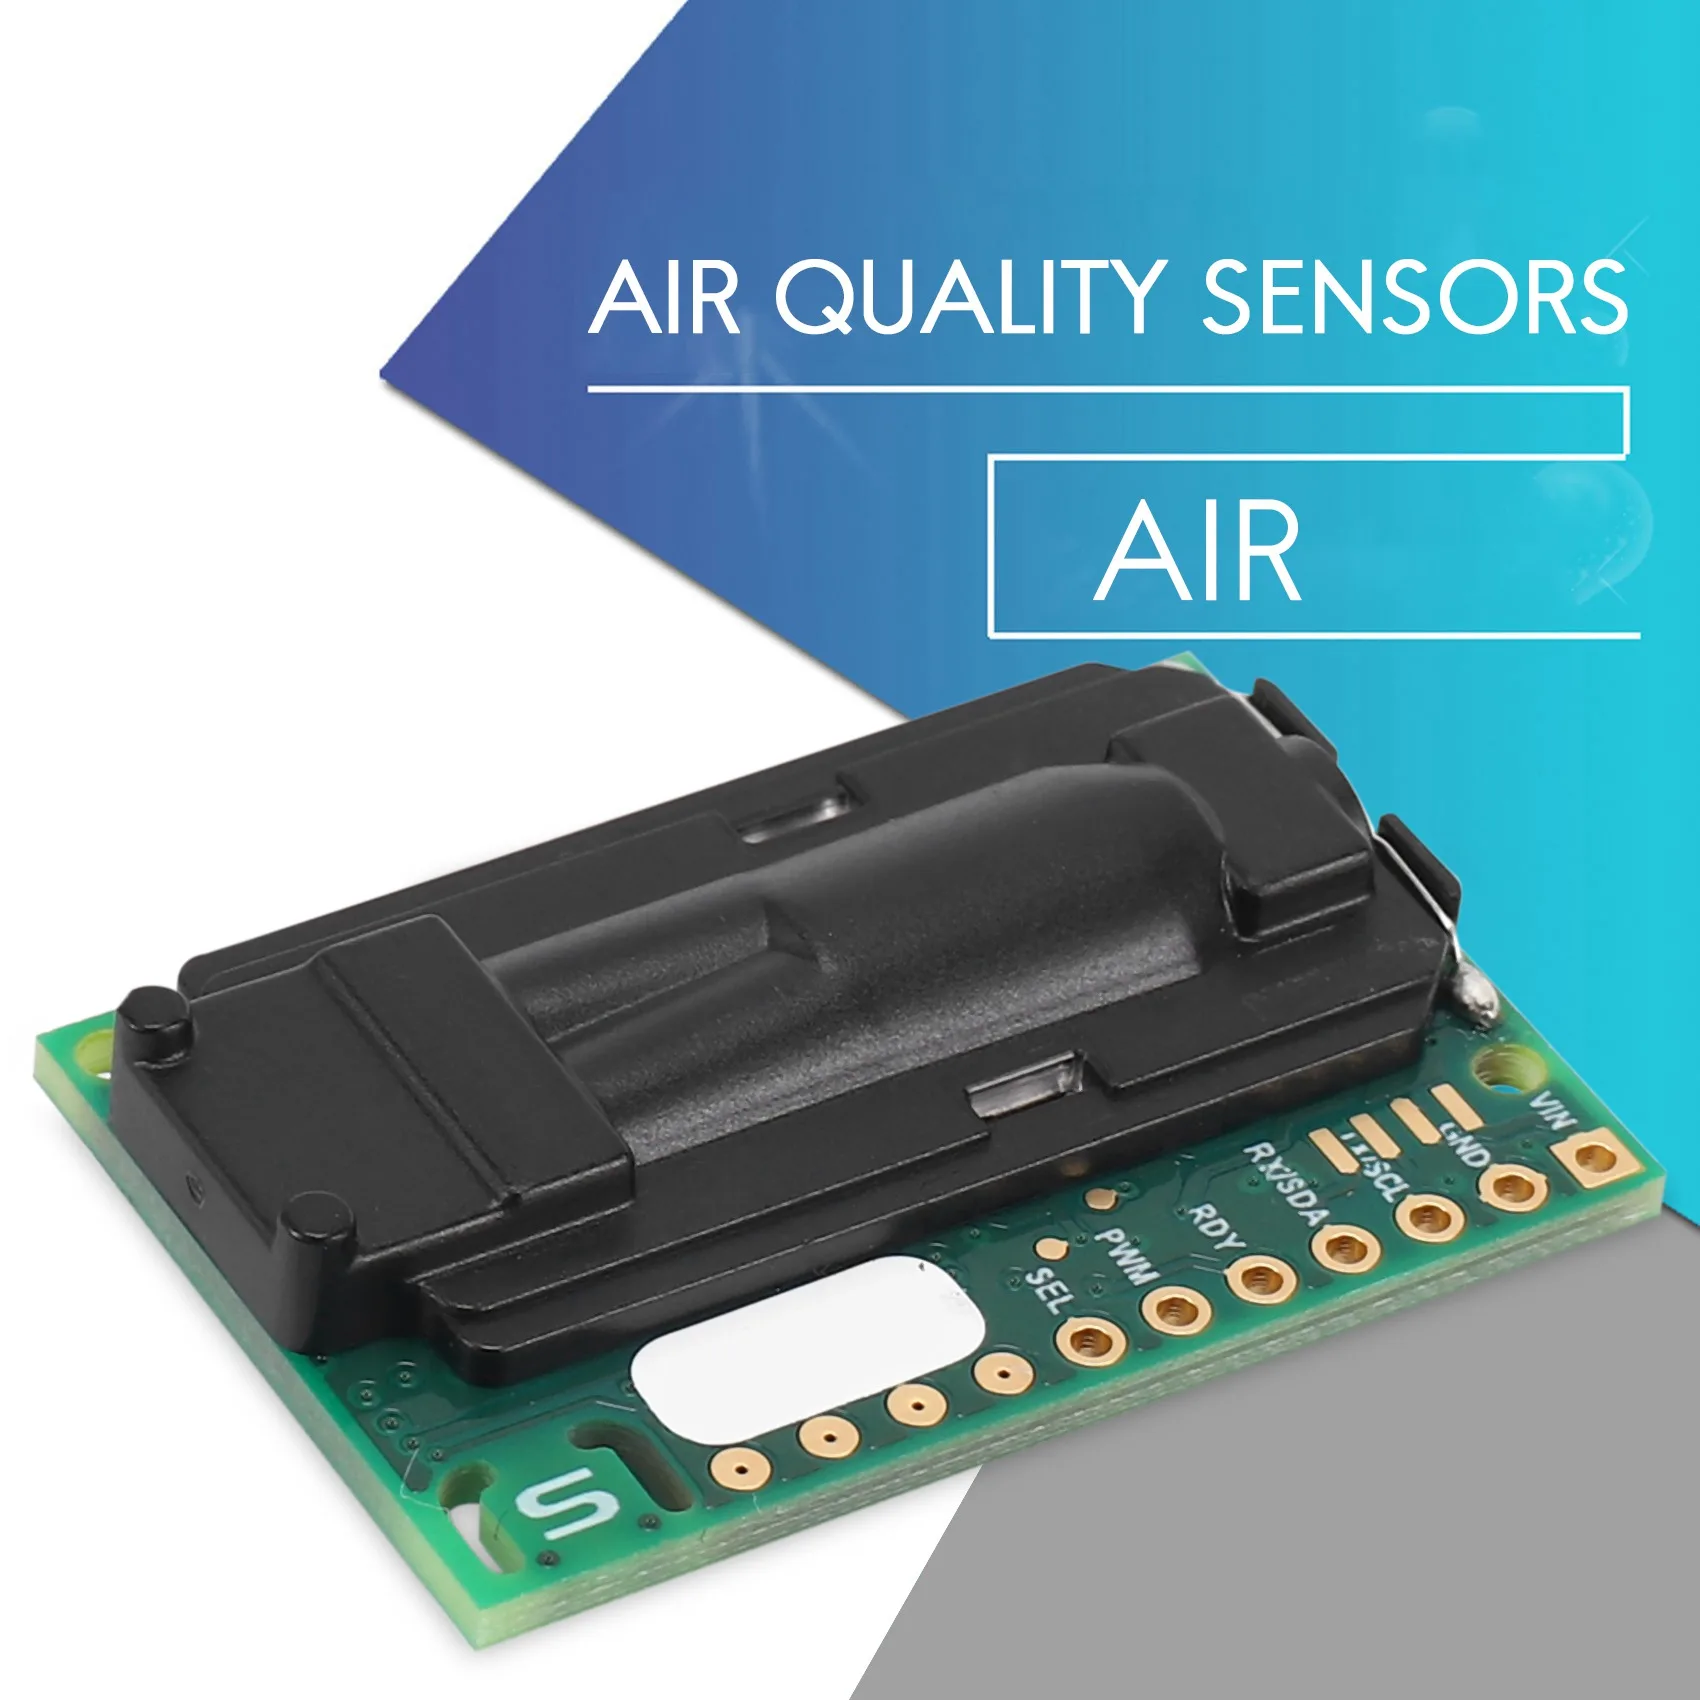 SCD30 איכות האוויר חיישנים מודול לקבלת CO2 ו-RH/T מדידות I2C Modbus PWM